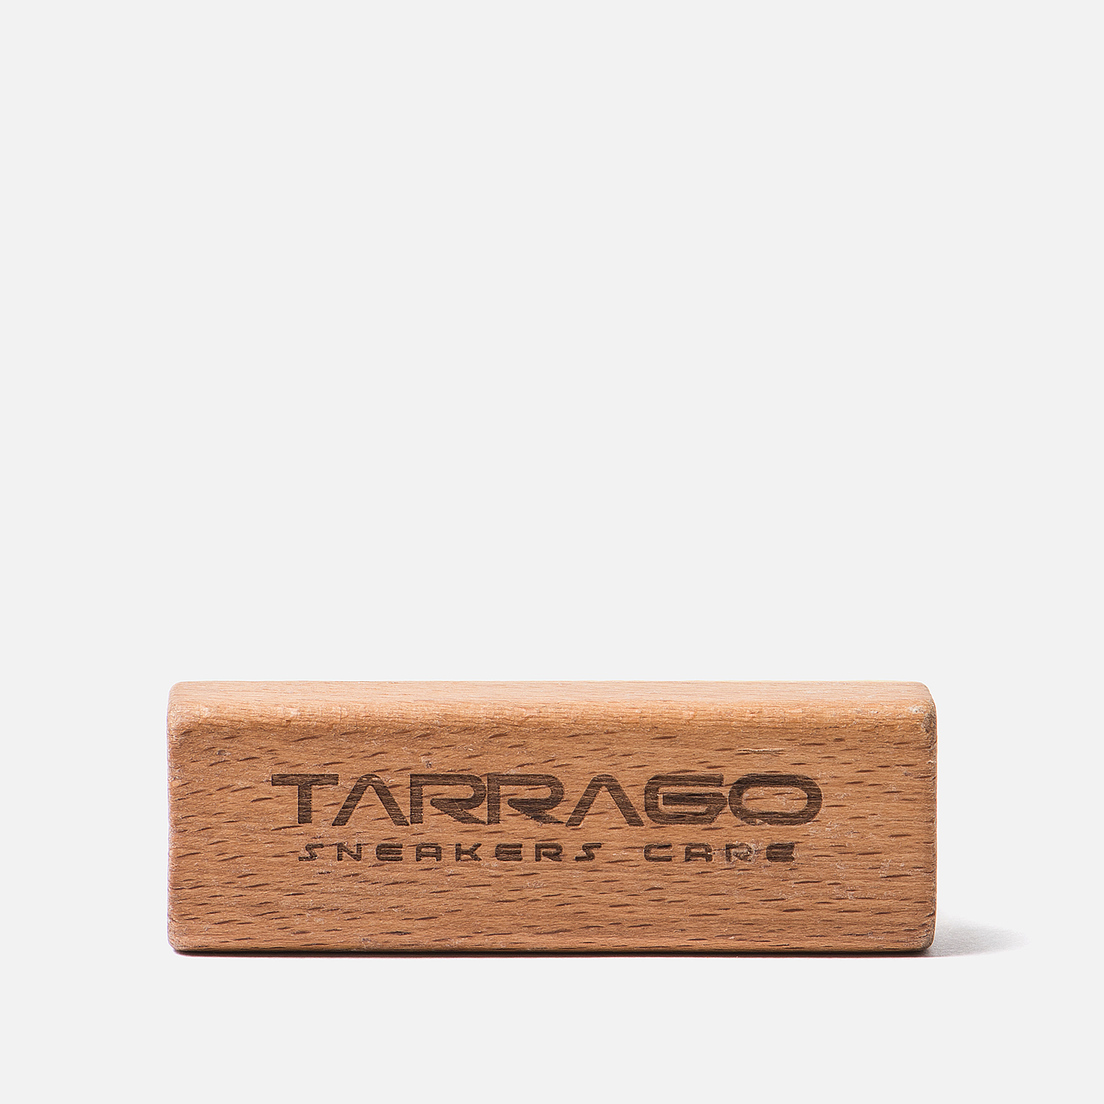 Tarrago Sneakers Care Щетка для обуви Sneakers Brush Beech